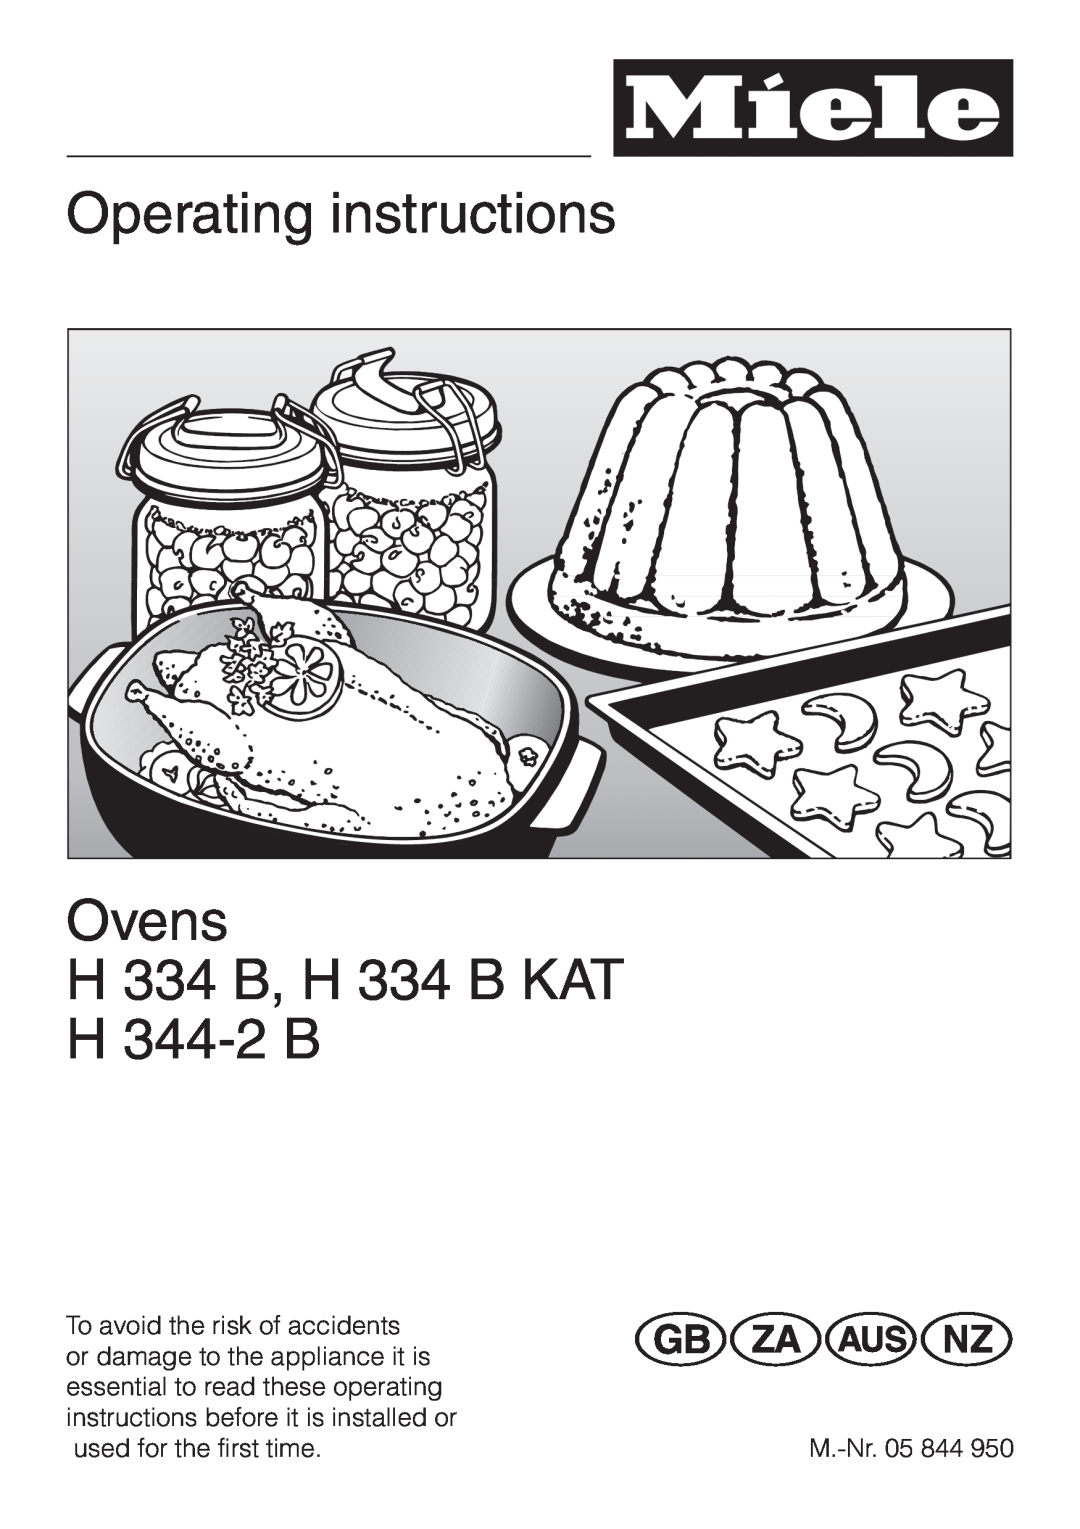 Miele H334B, H 344-2 B manual Operating instructions Ovens, H 334 B, H 334 B KAT H 344-2B, Gzwo 